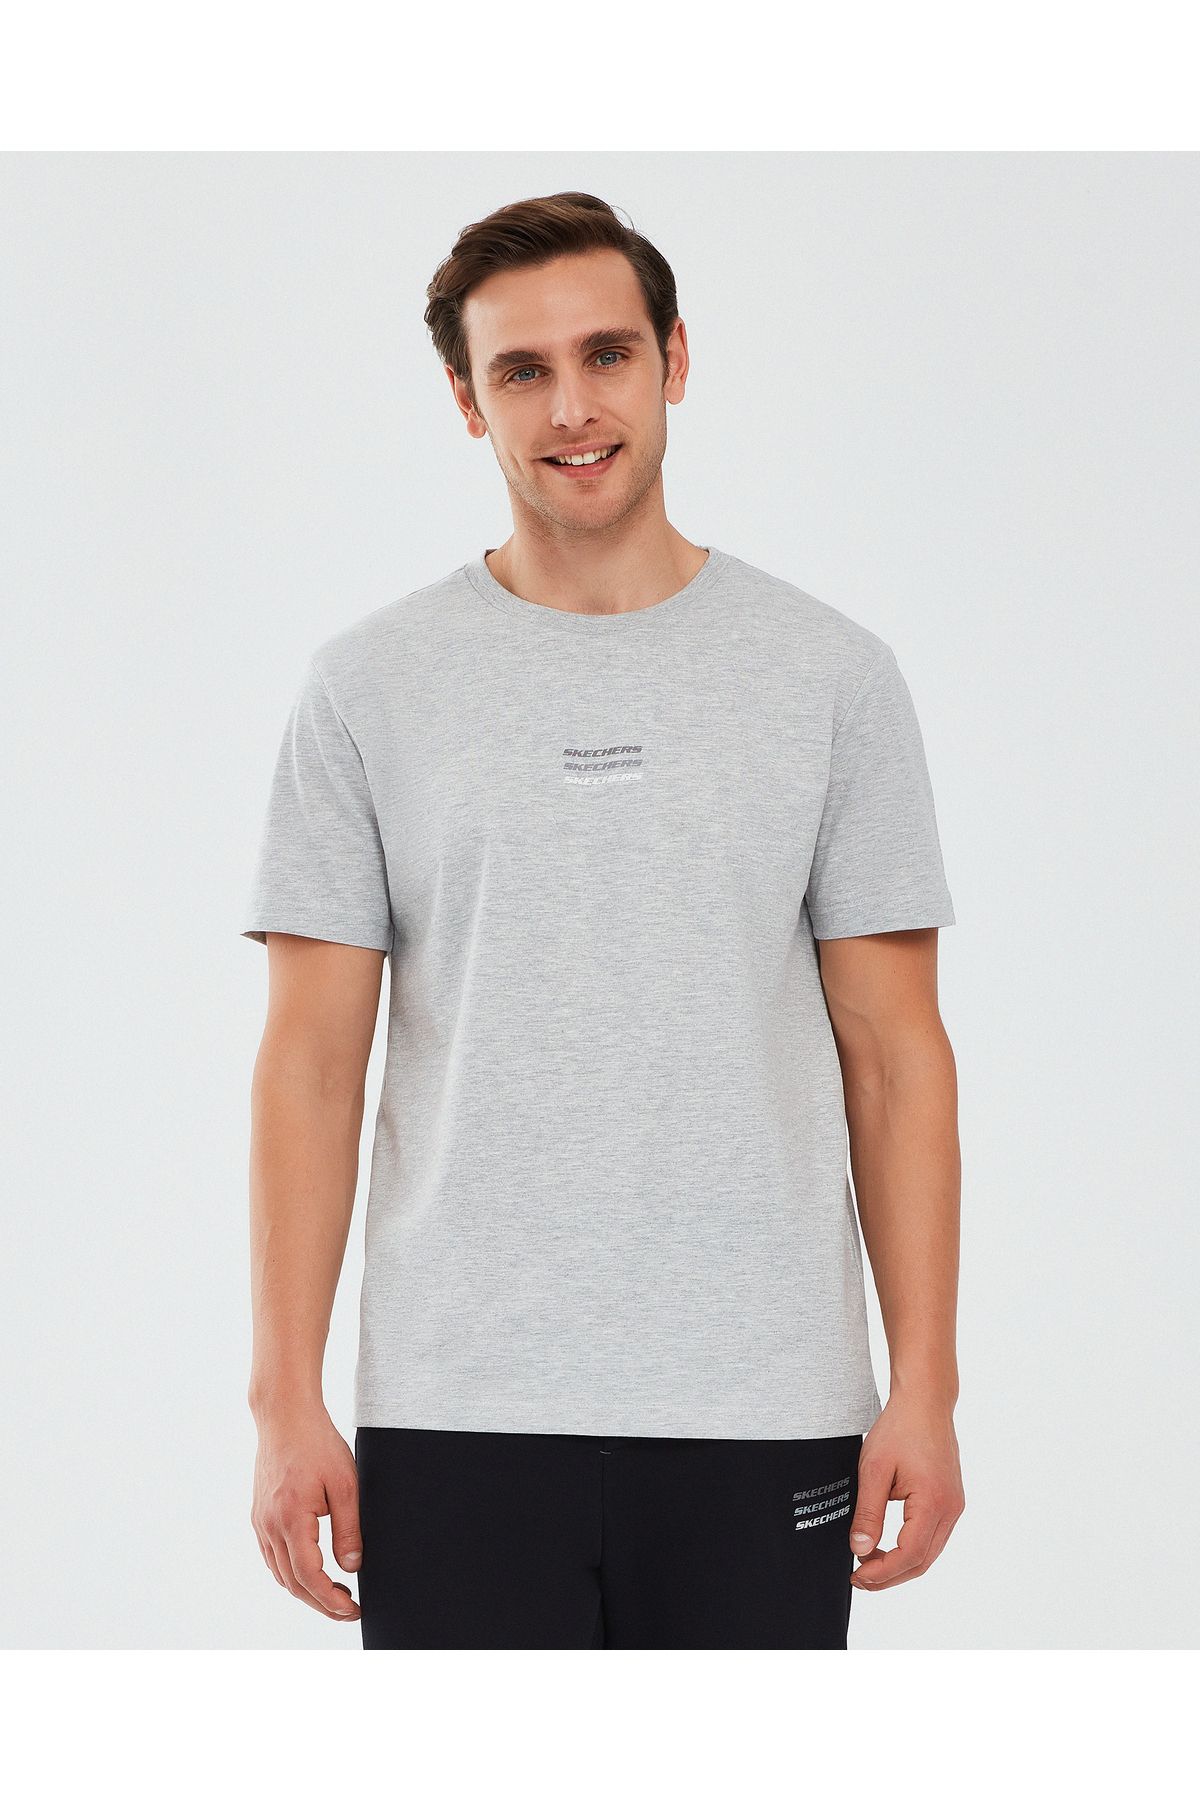 Skechers Essential M Short Sleeve T-shirt Erkek Gri Tshirt S241007-036